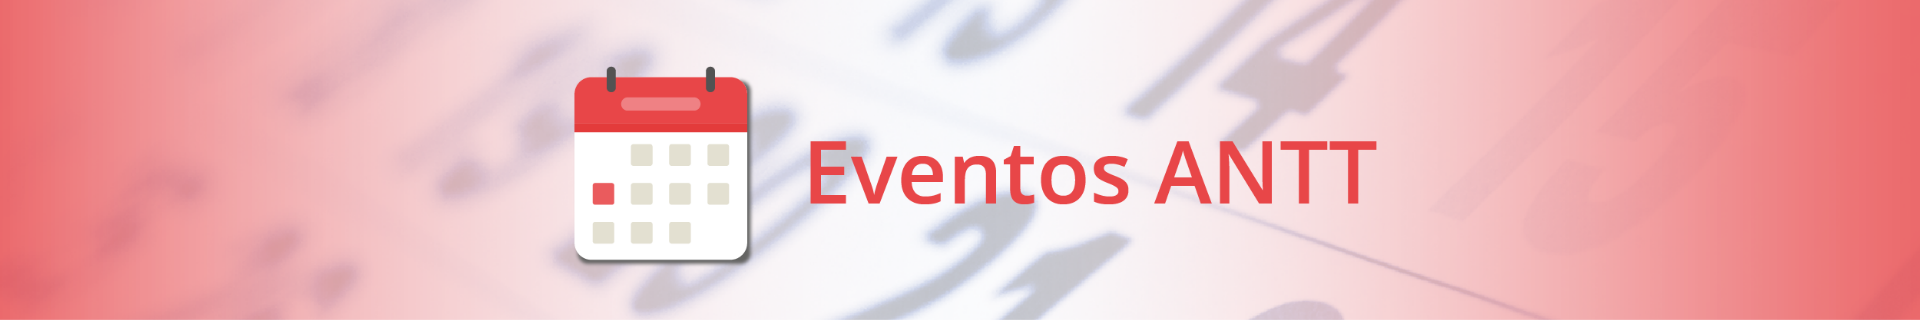 banner portal_EVENTOS ANTT-03.png